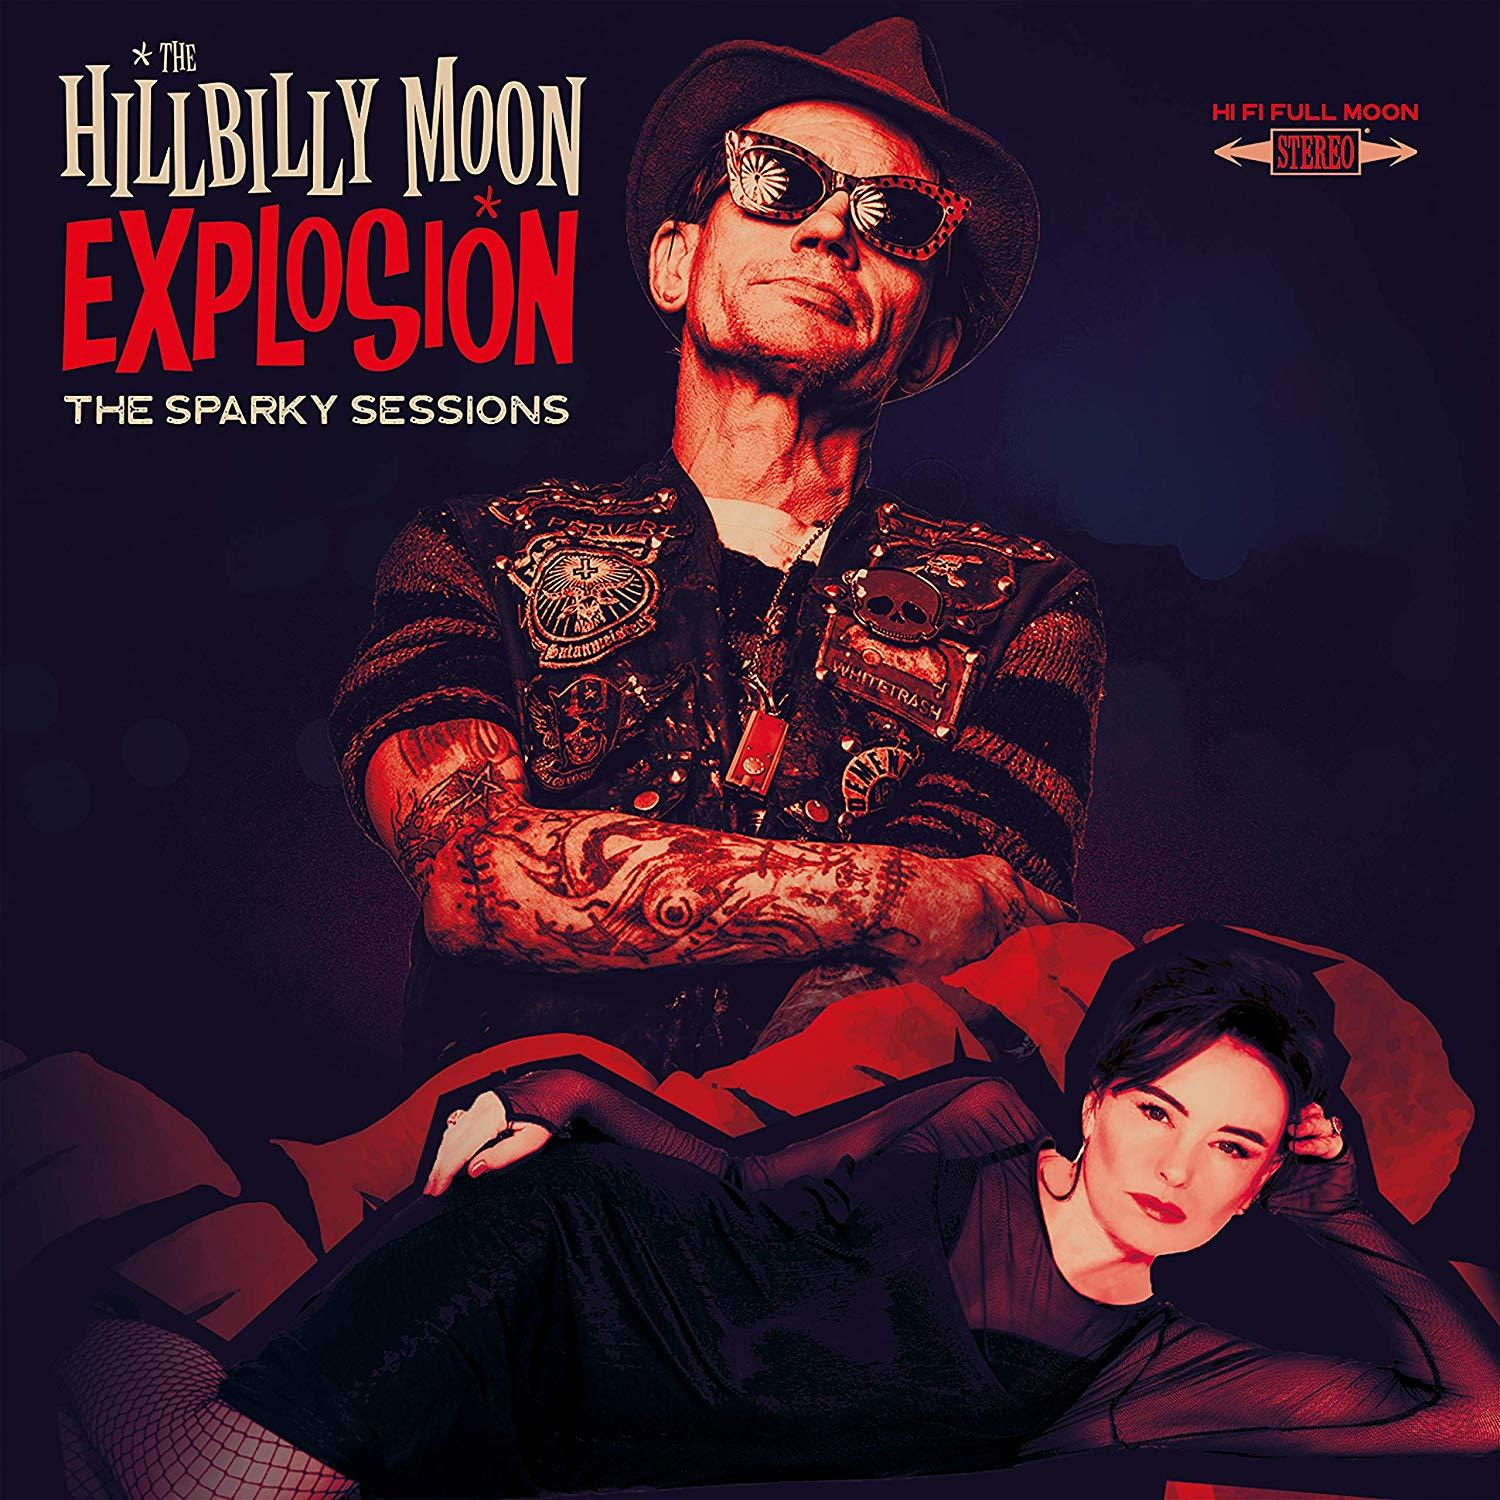 Hillbilly Moon Explosion - The Sessions Sparky - (Vinyl)